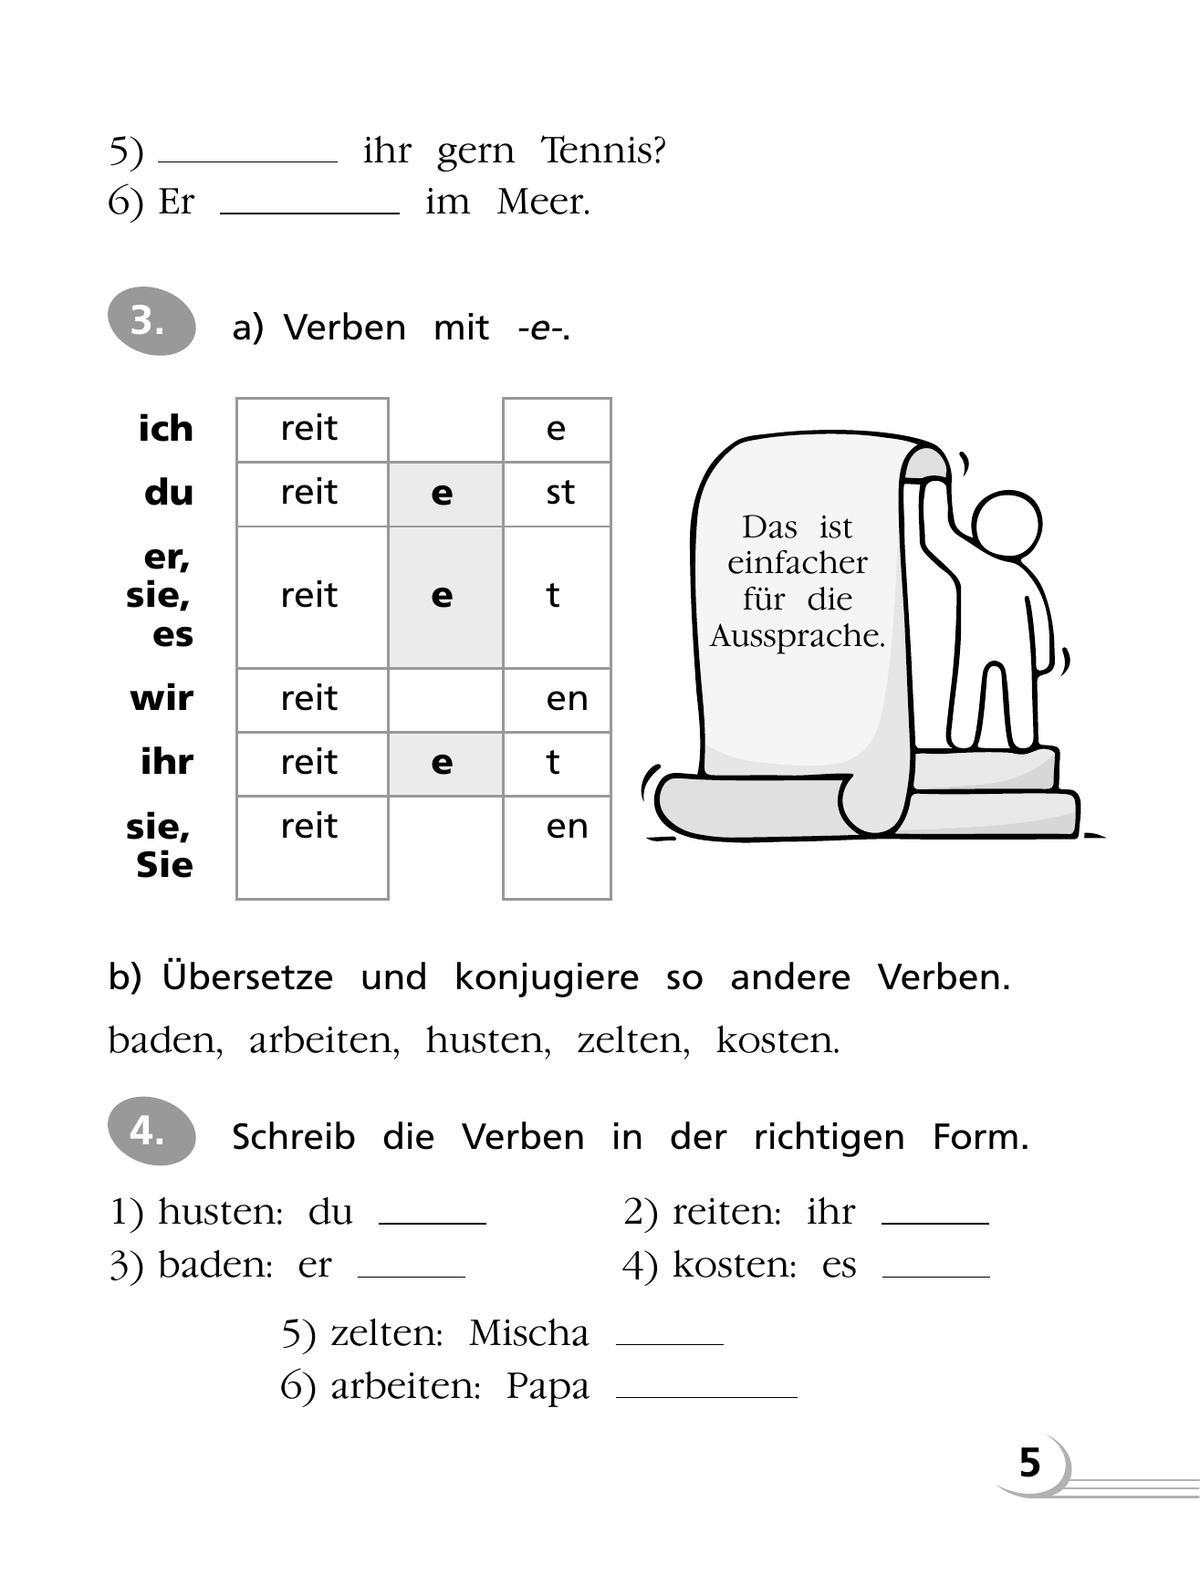 Немецкий язык. Грамматический тренажер. 4 класс 4